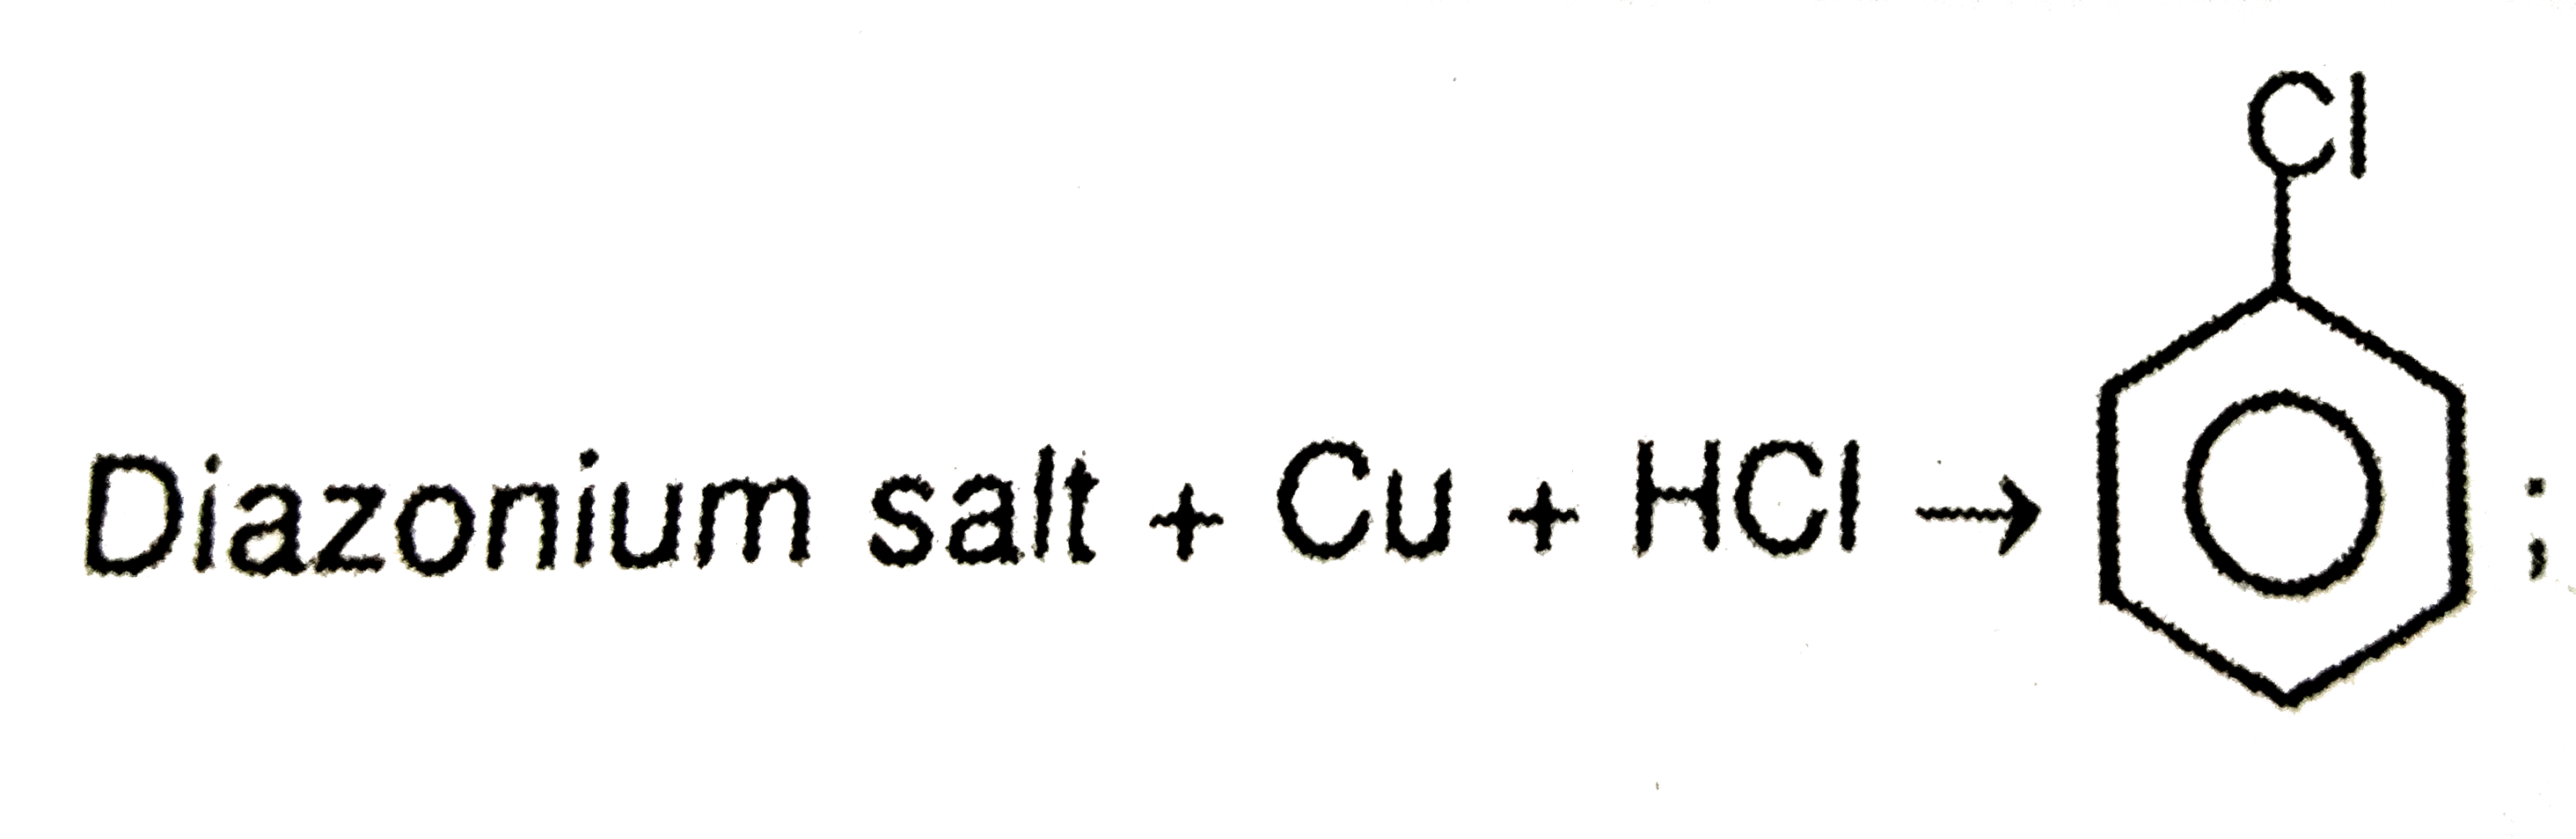 Diazonium salt , the reaction is known as